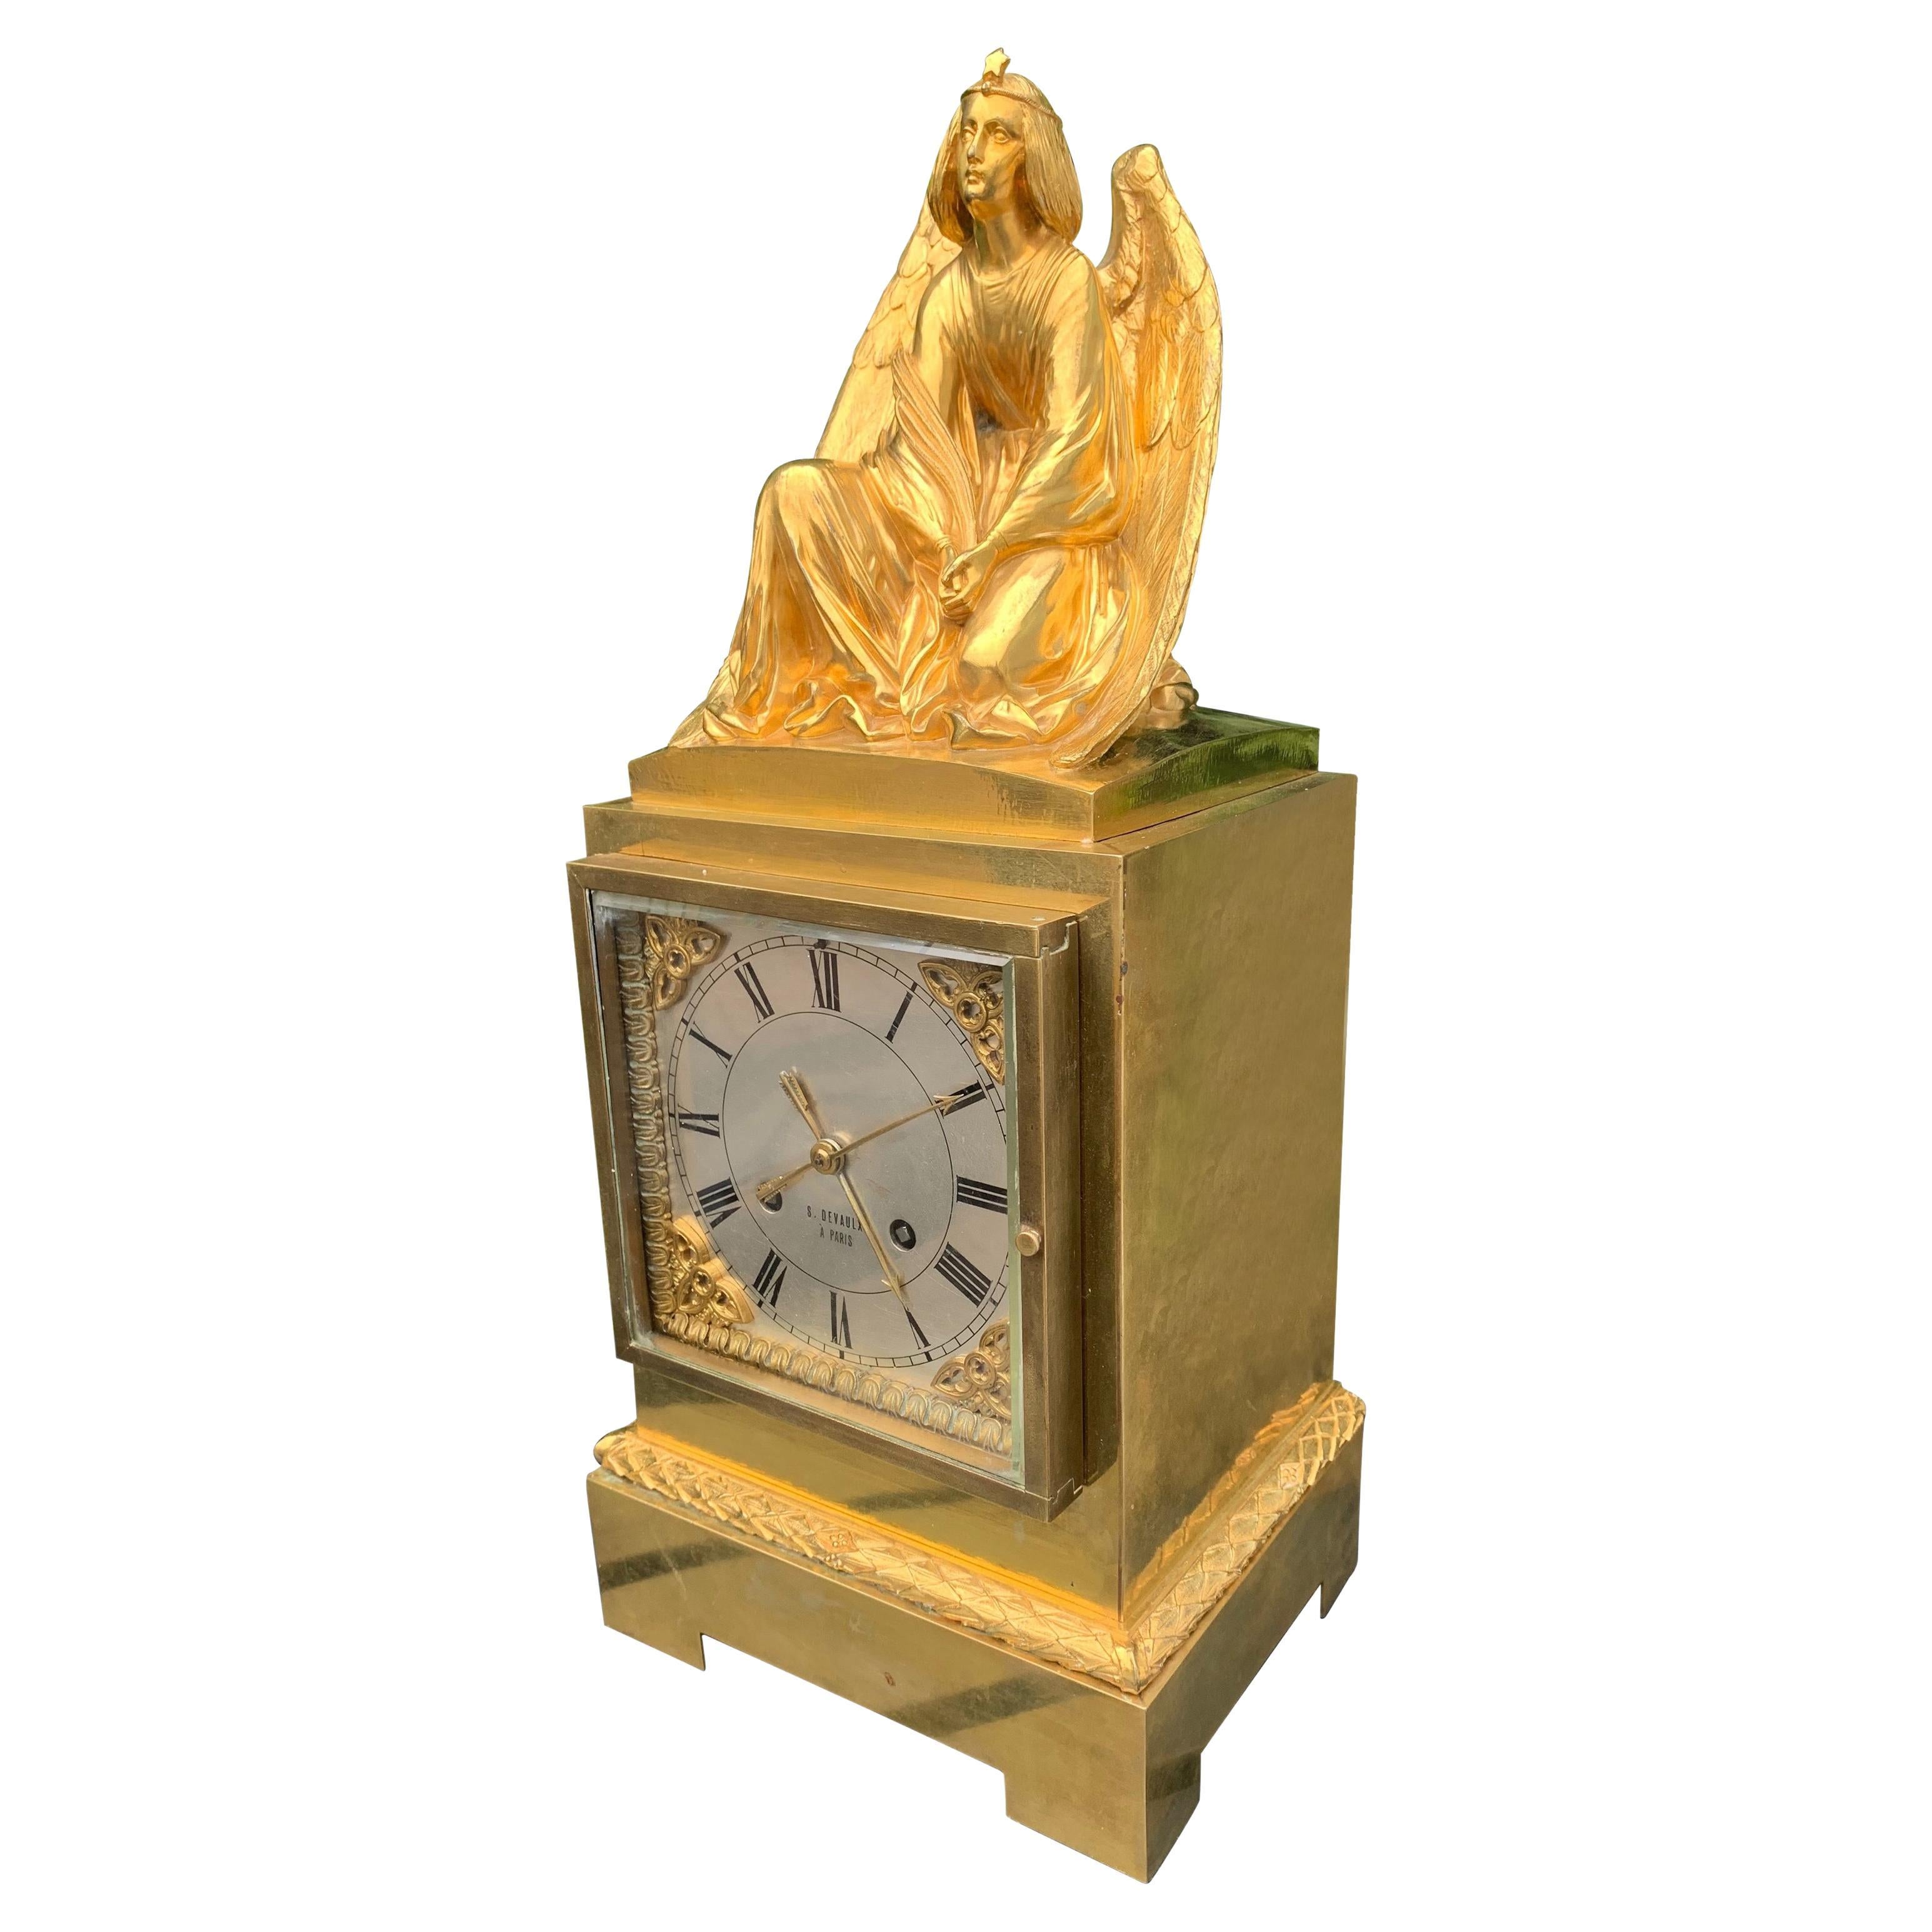 Stunning Gilt Bronze Gothic Table Clock w Earth Angel Sculpture by Devaulx Paris